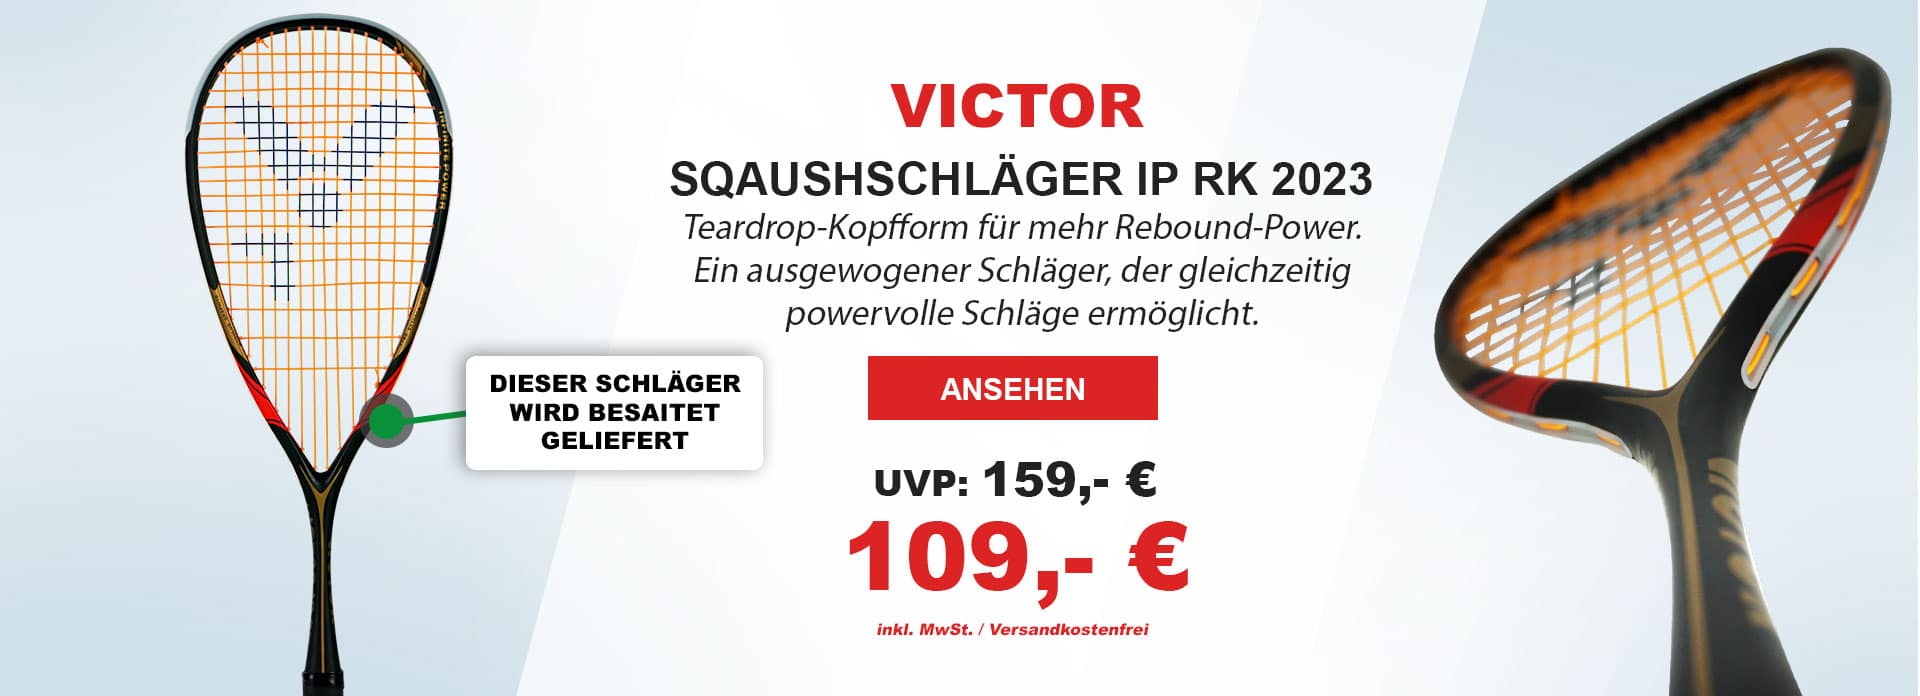 squash-schlaeger-victor-ip-rk-2023